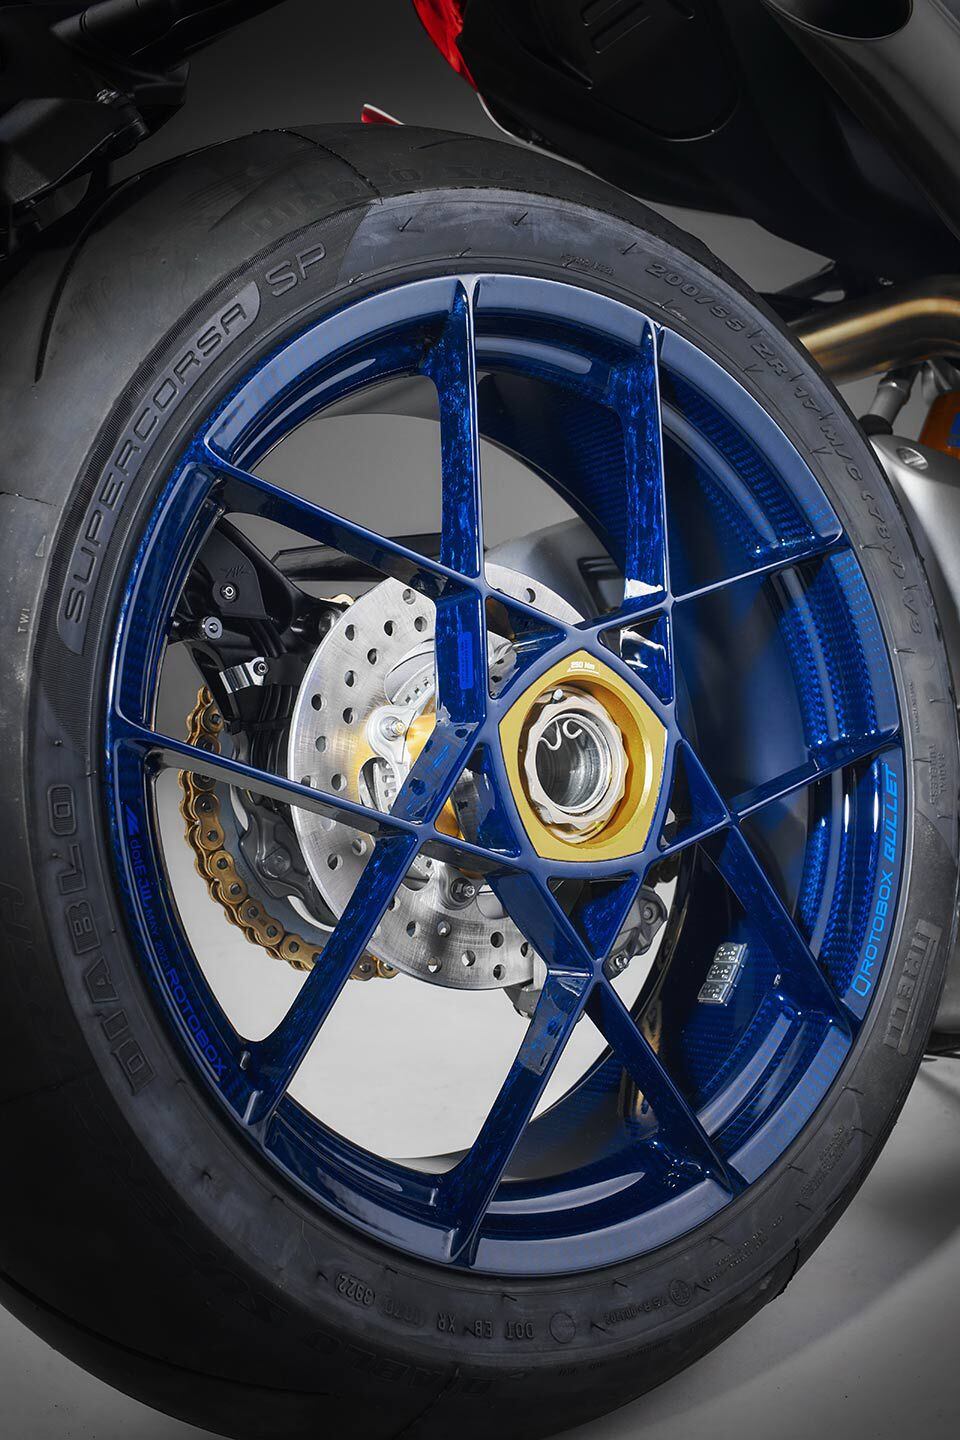 Rotobox carbon fiber wheels could be the most impressive part of the Brutale 1000 RR Assen.